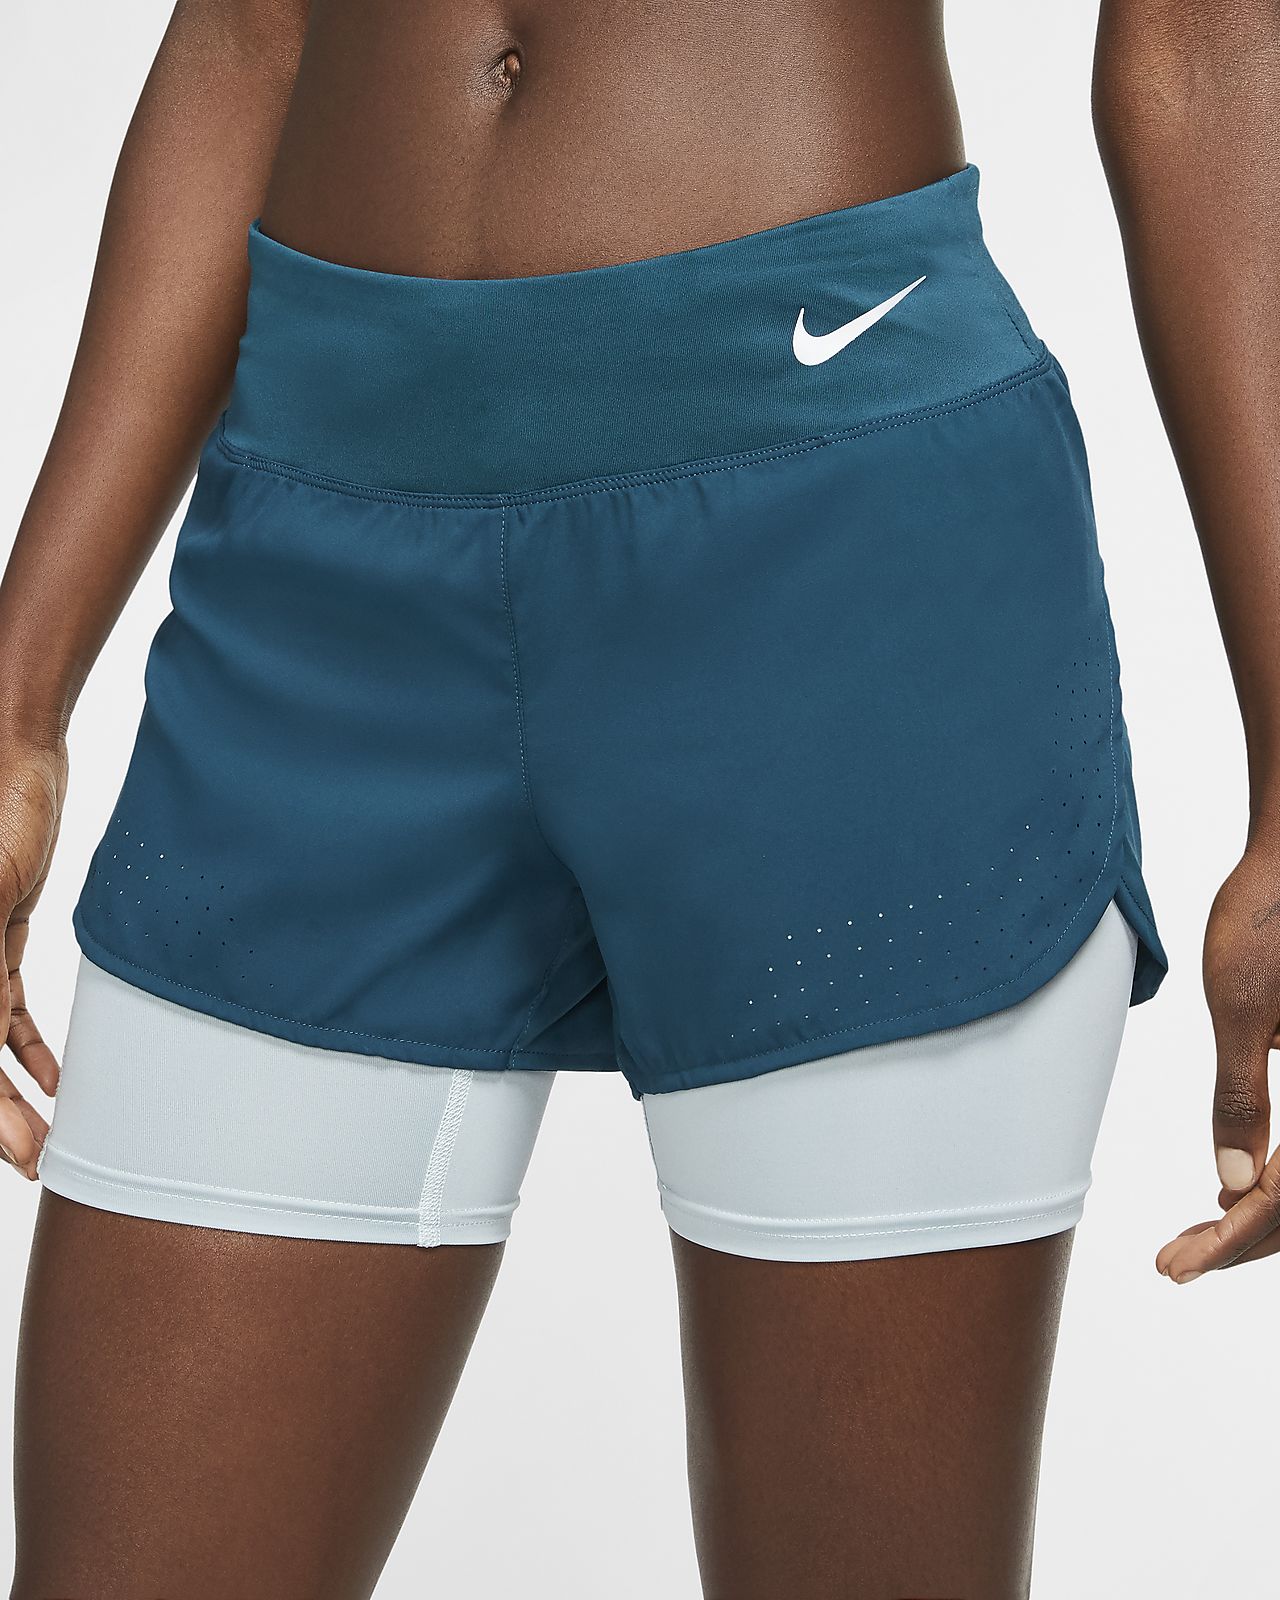 Nike 2 In 1 Shorts F7d503